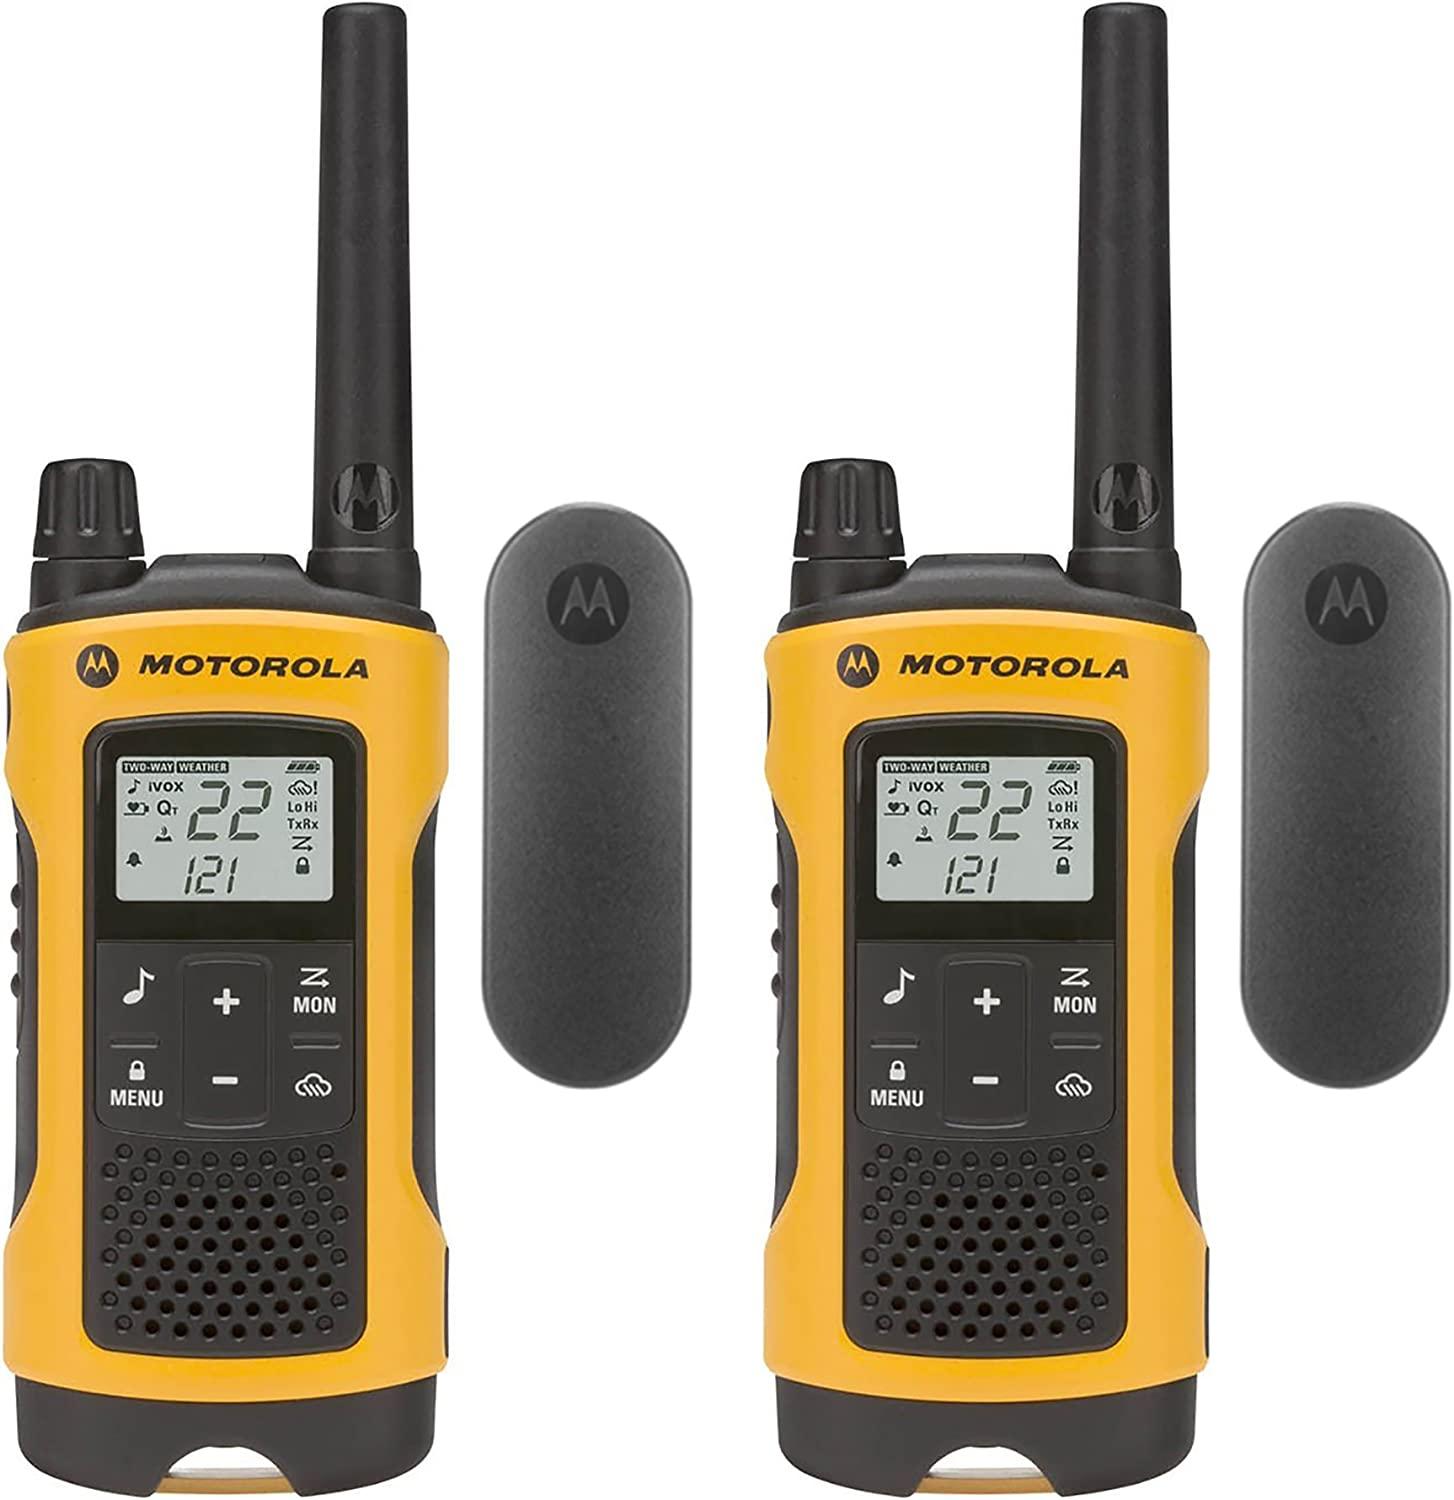 long range walkie-talkies- Motorola T402
